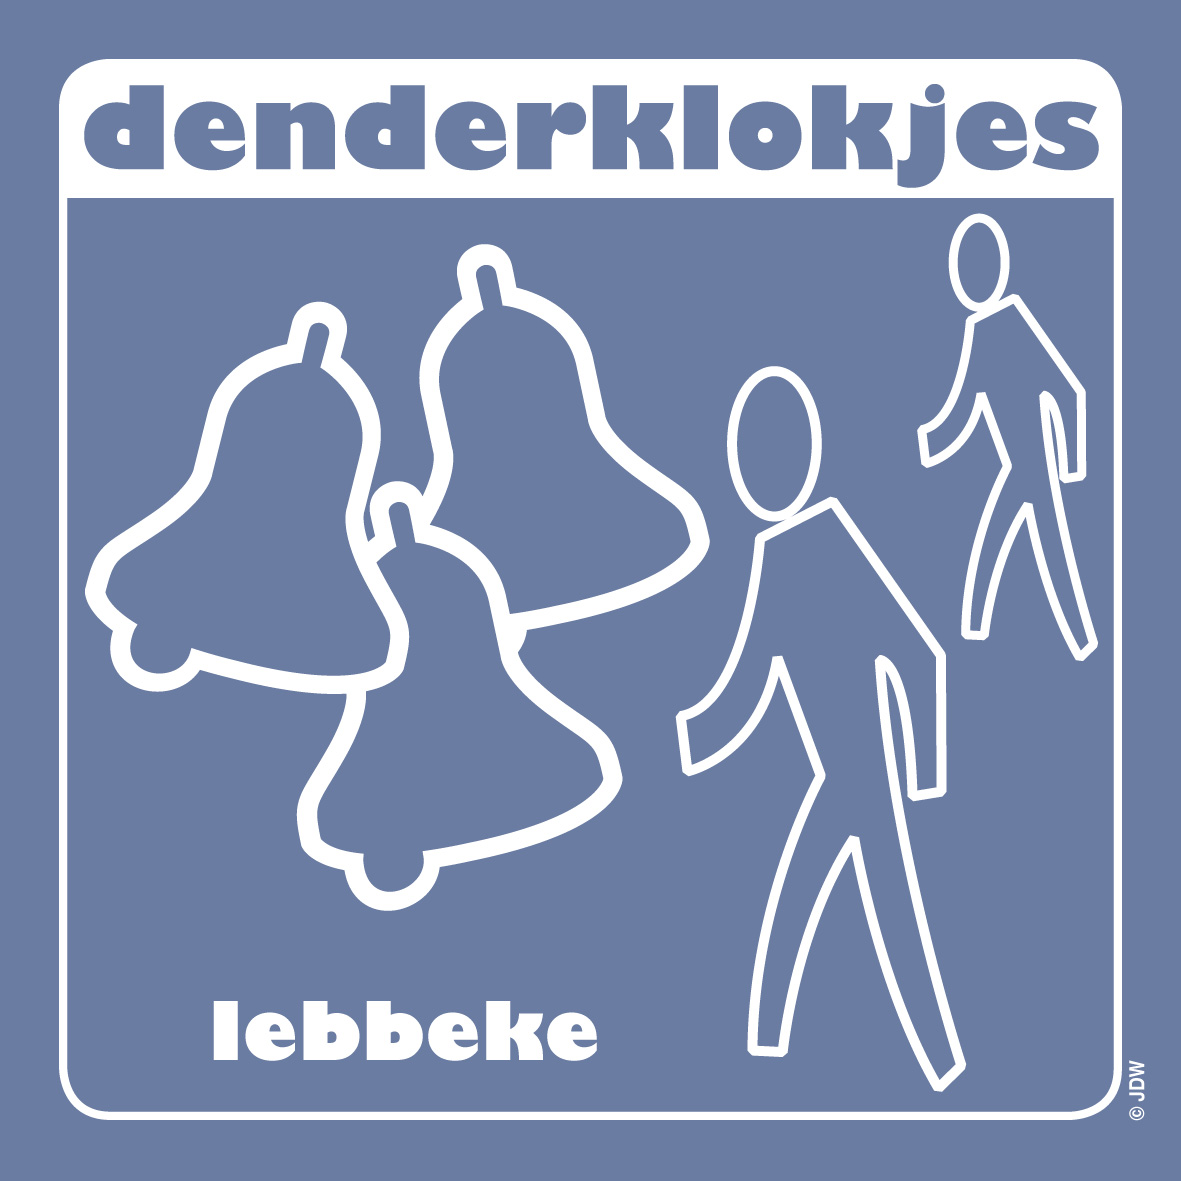 Wandelclub Denderklokjes Lebbeke